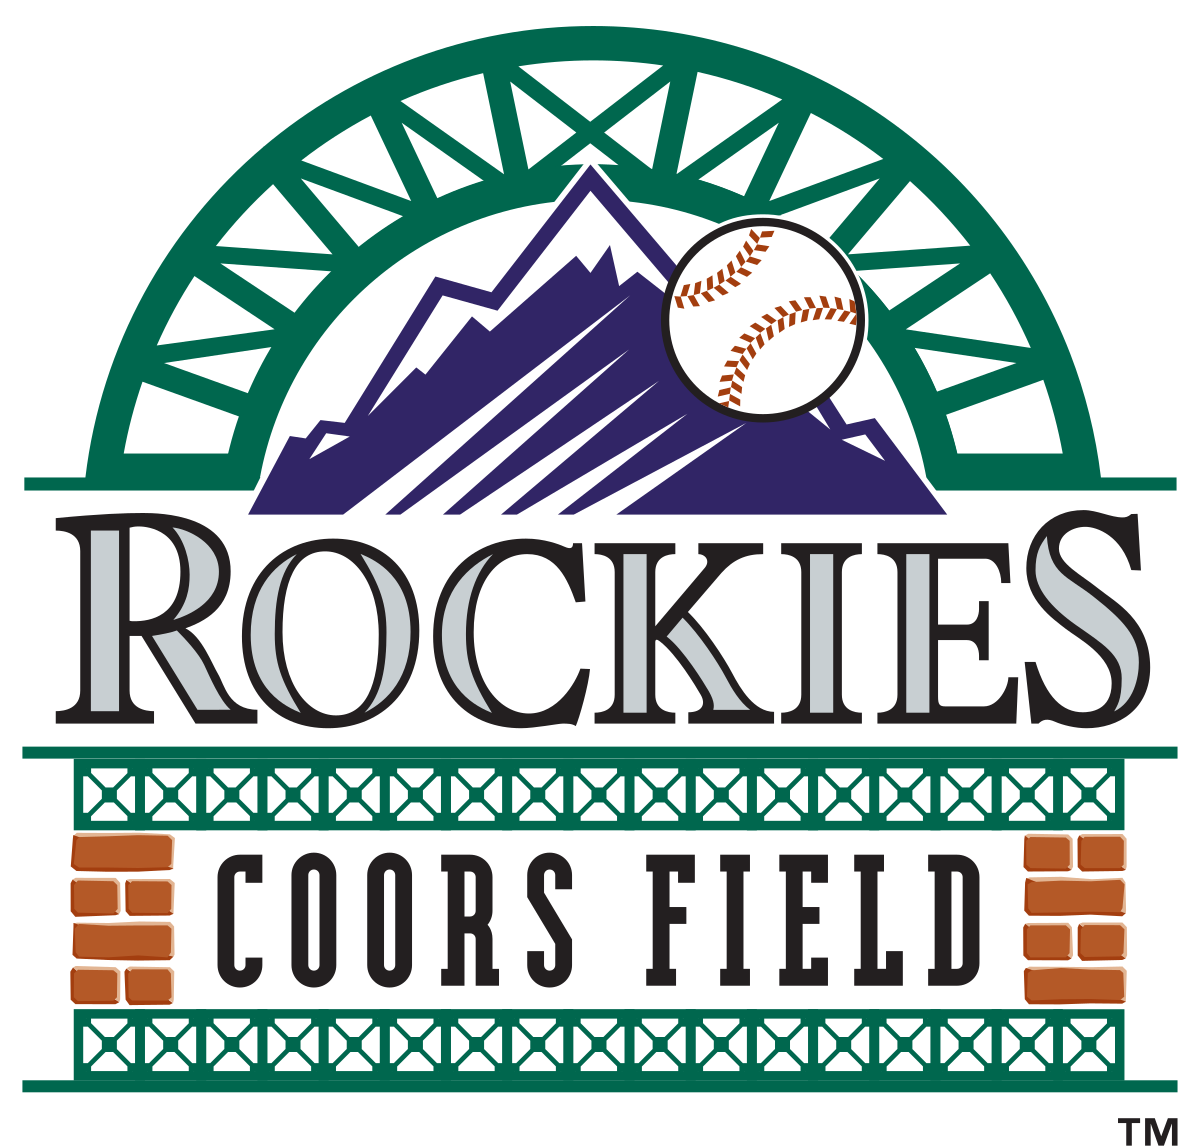 Coors Field - Wikipedia